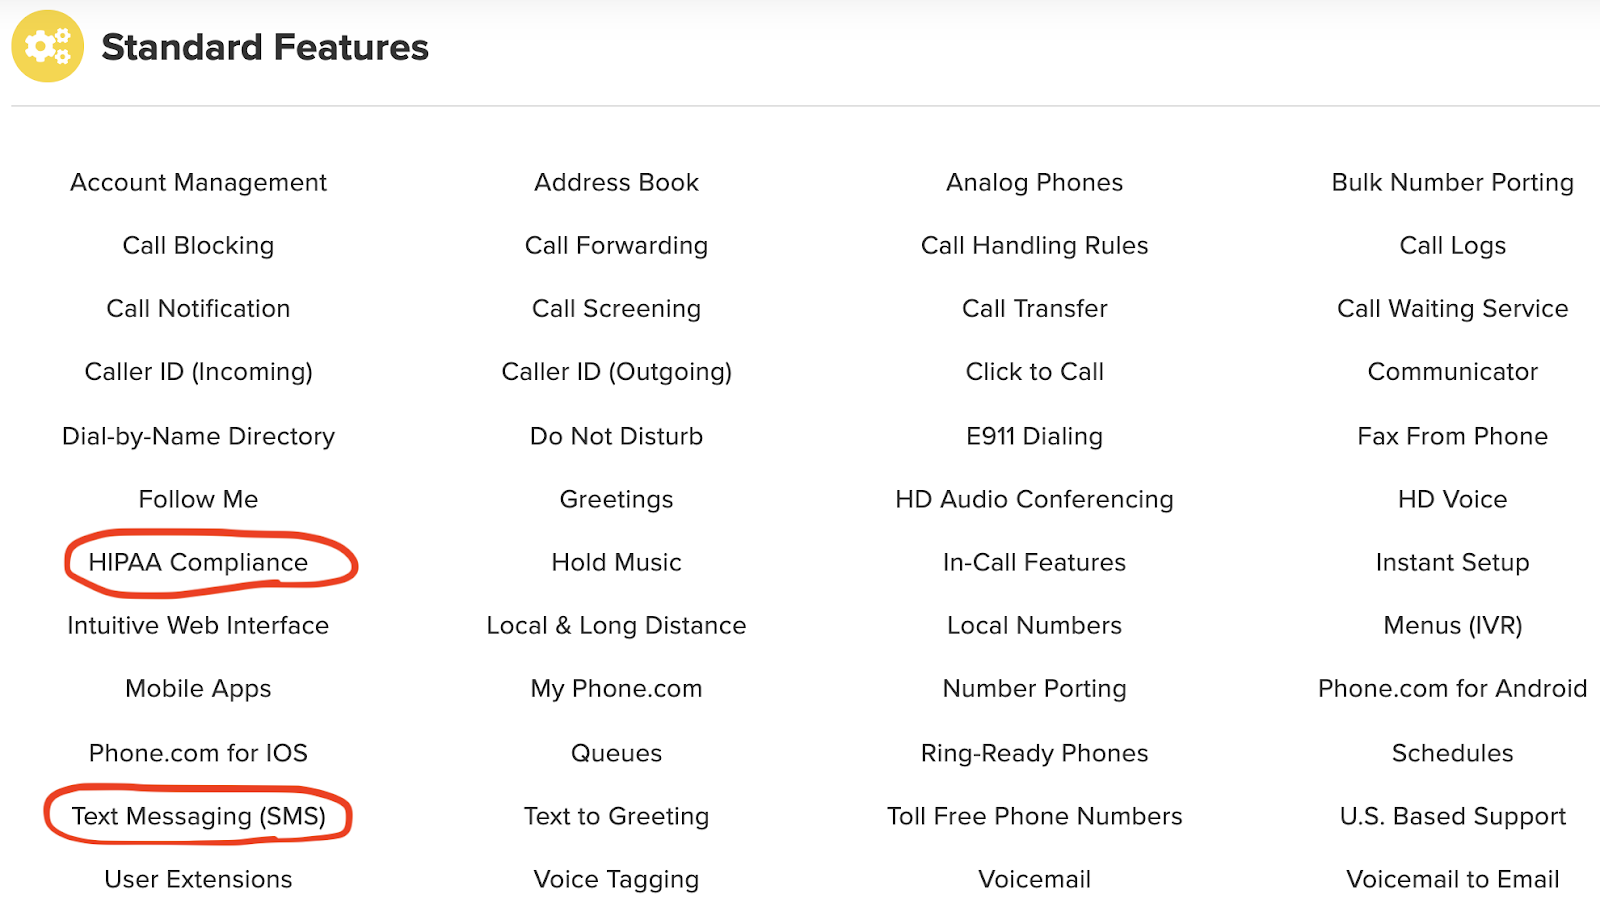 Phone.com Standard Features